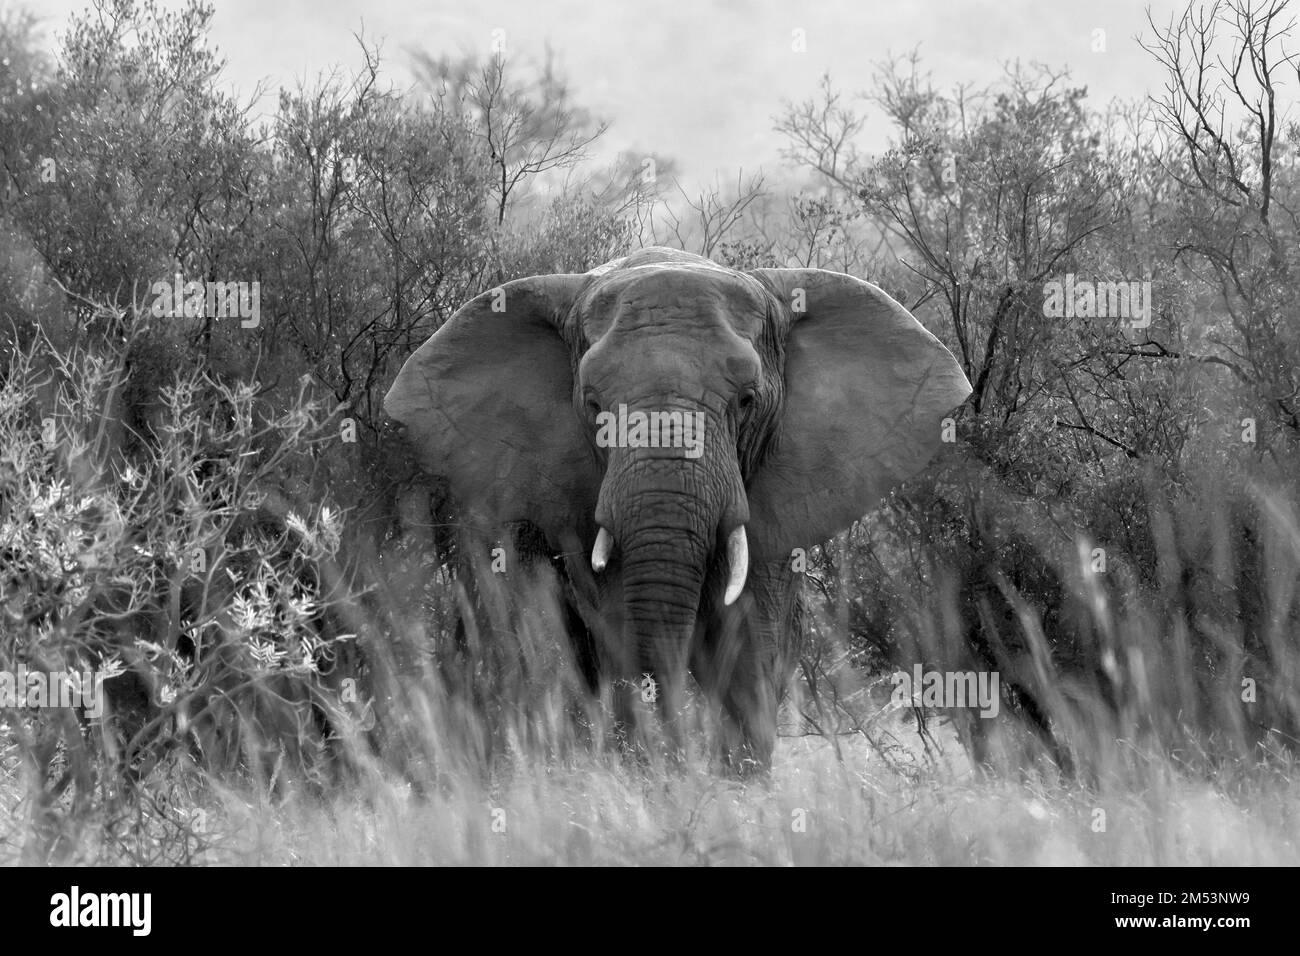 Elefante con orejas grandes extendidas, emergiendo del arbusto, B&W, Mabula, Sudáfrica Foto de stock